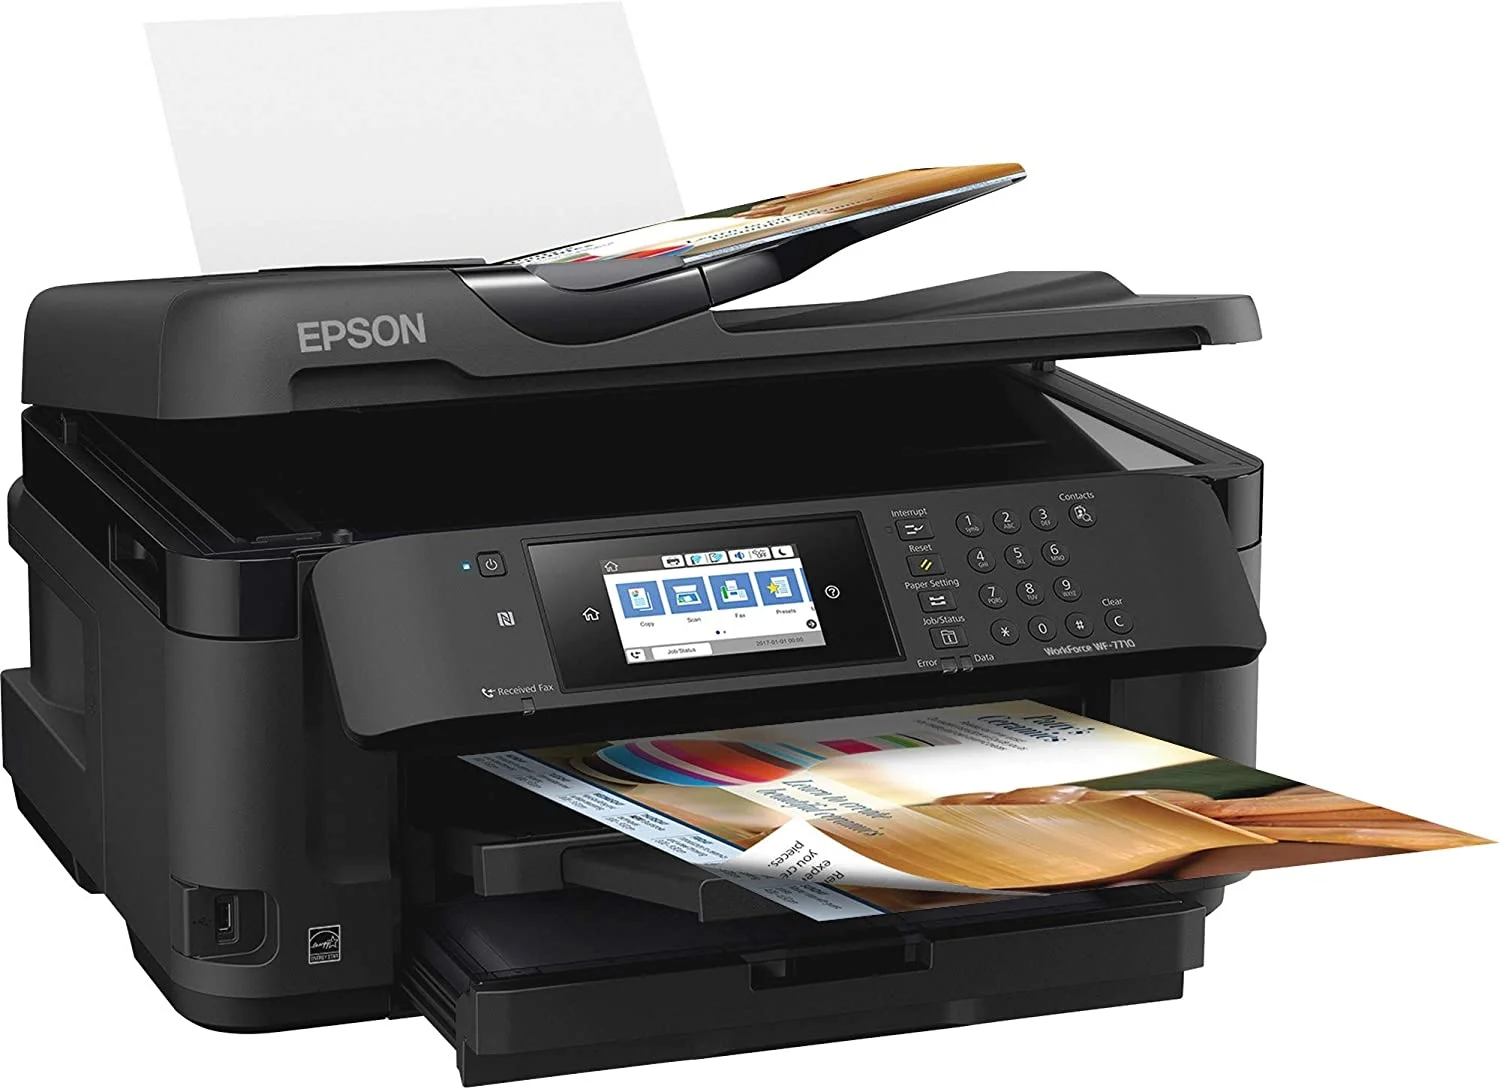 Epson WorkForce WF-7710 sublimation printer